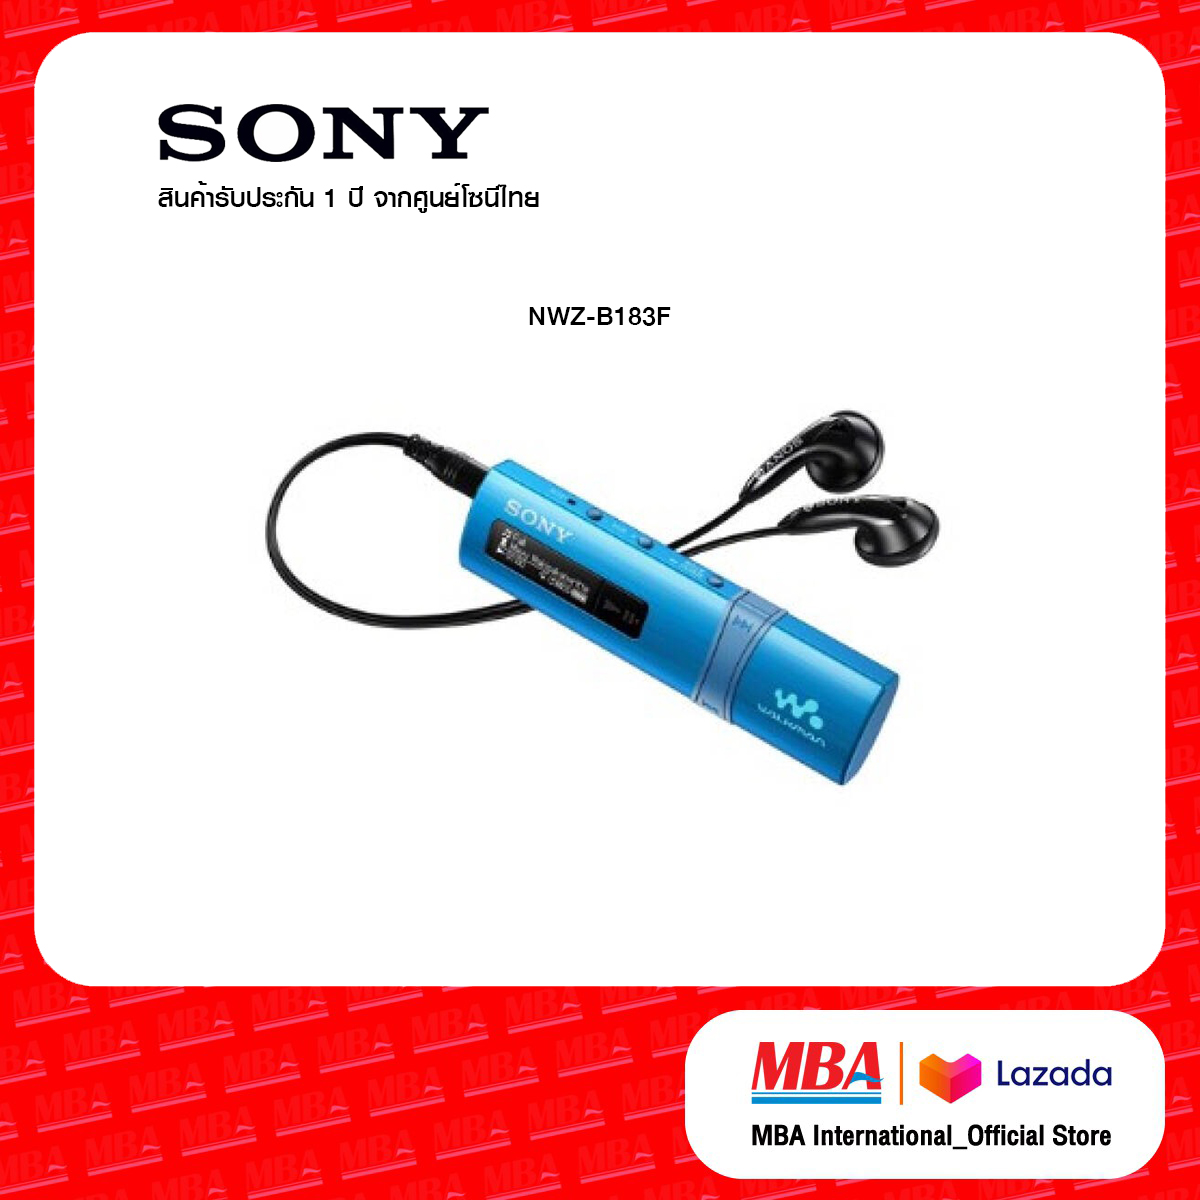 Sony MP3 Walkman เครื่องเล่น เอ็มพีสาม โซนี่ วอร์คแมน รุ่น NWZ B183F พร้อม USB ในตัว